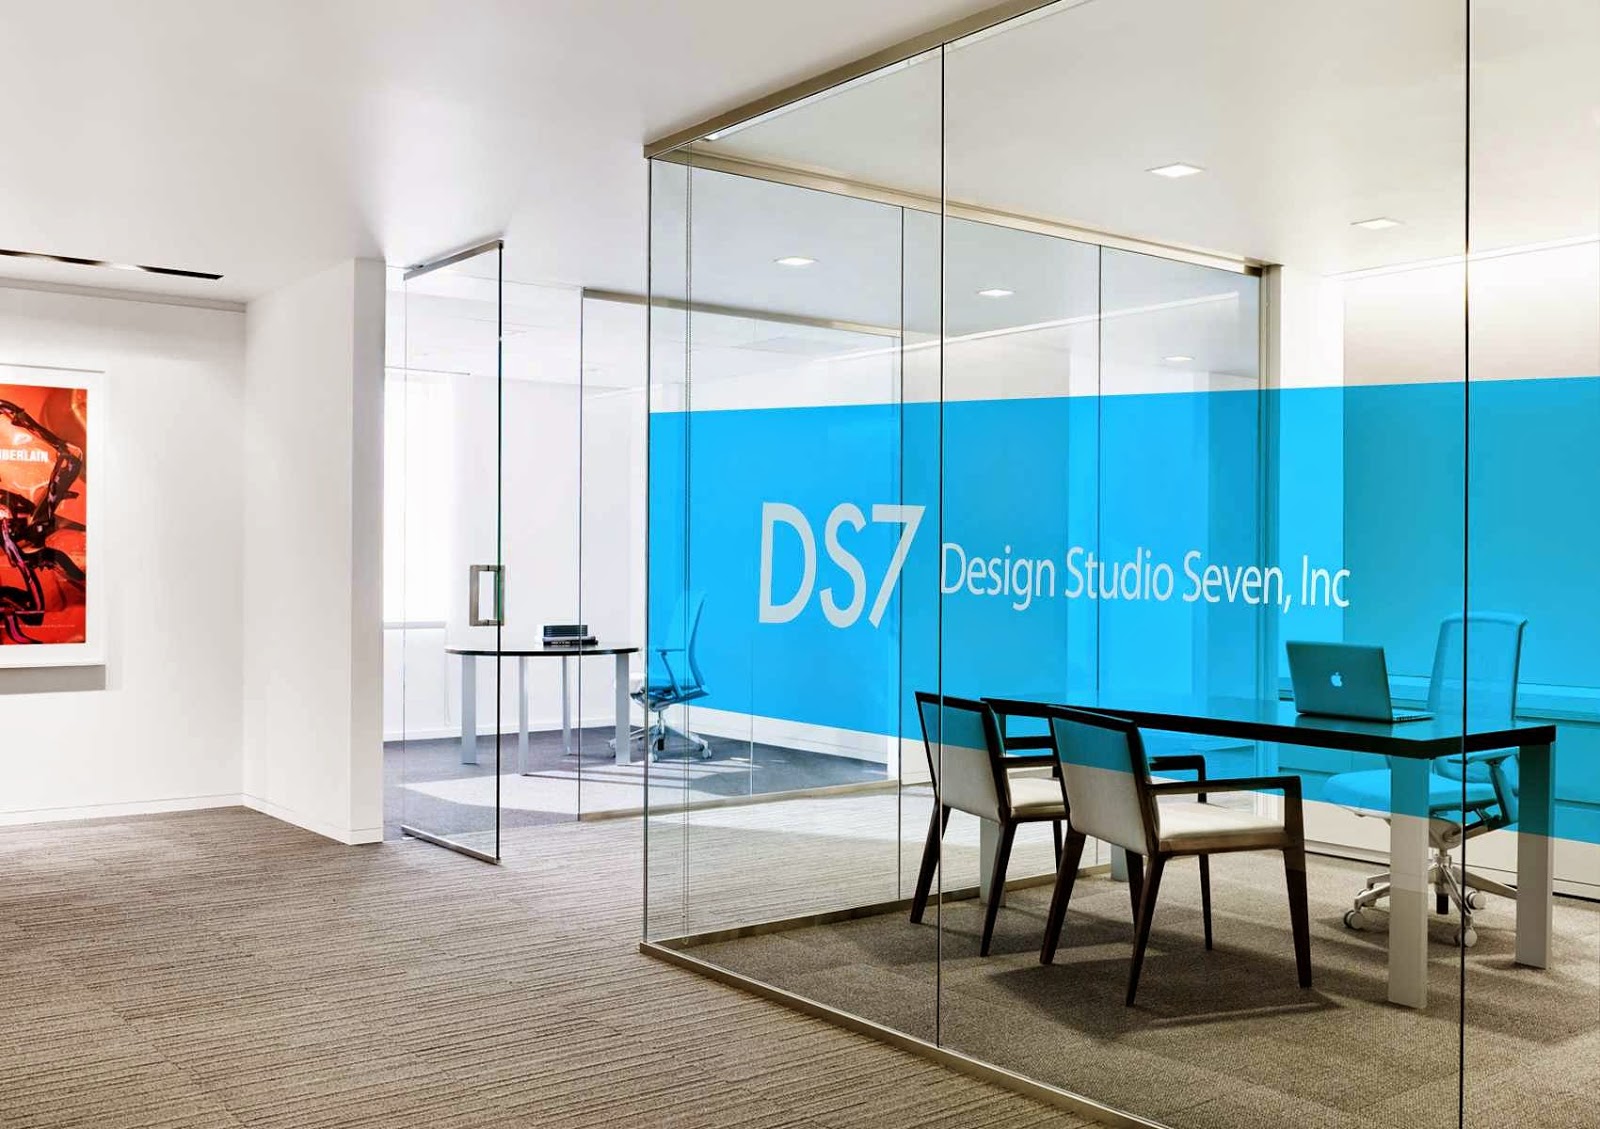 Photo of Design Studio Seven, Inc in New York City, New York, United States - 1 Picture of Point of interest, Establishment